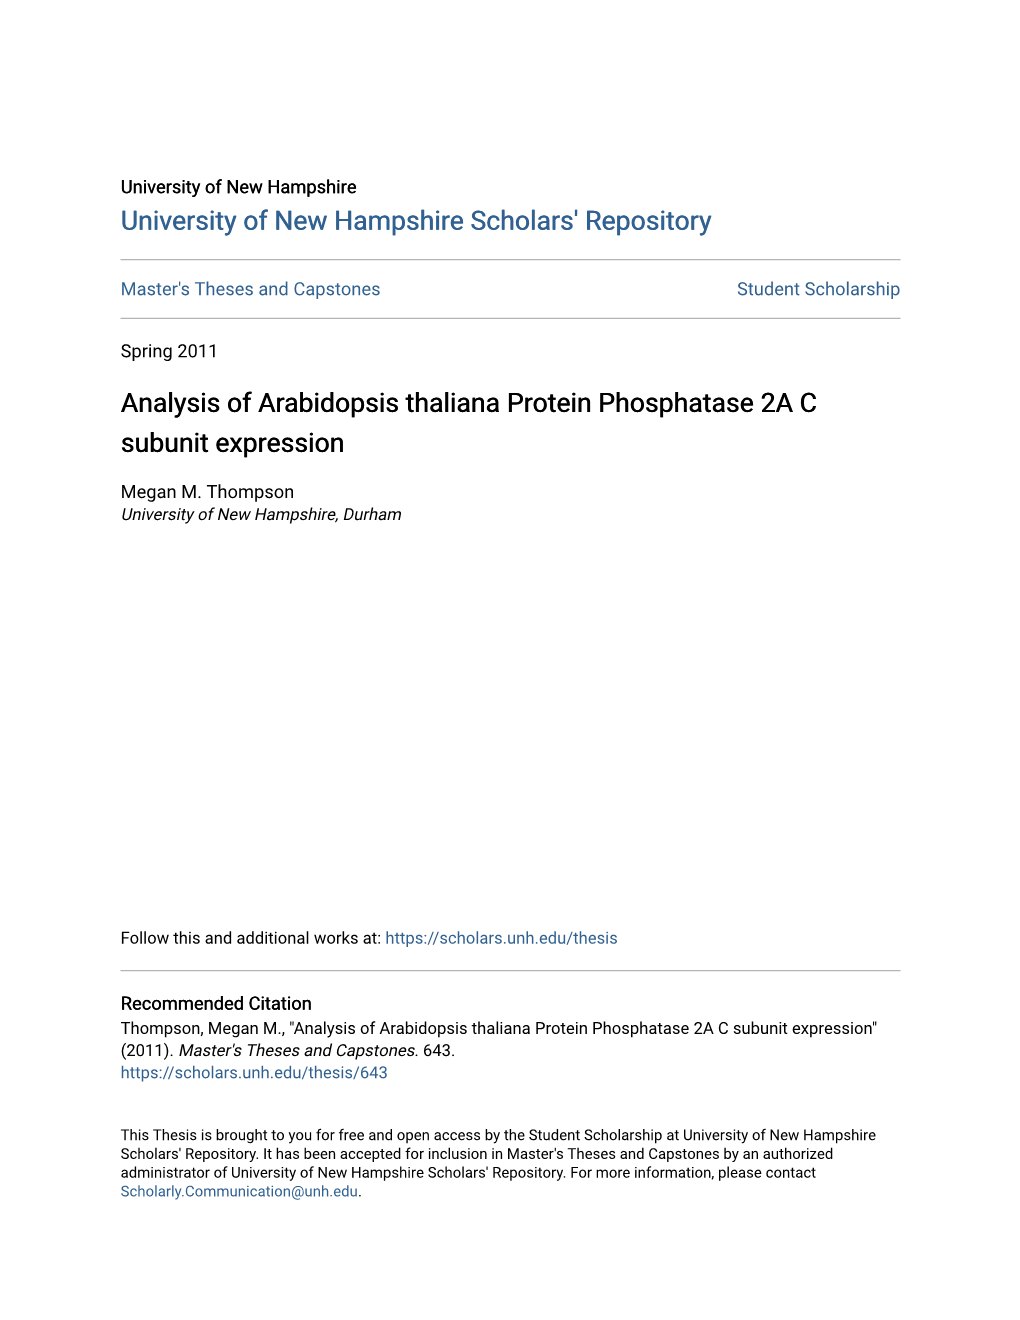 Analysis of Arabidopsis Thaliana Protein Phosphatase 2A C Subunit Expression